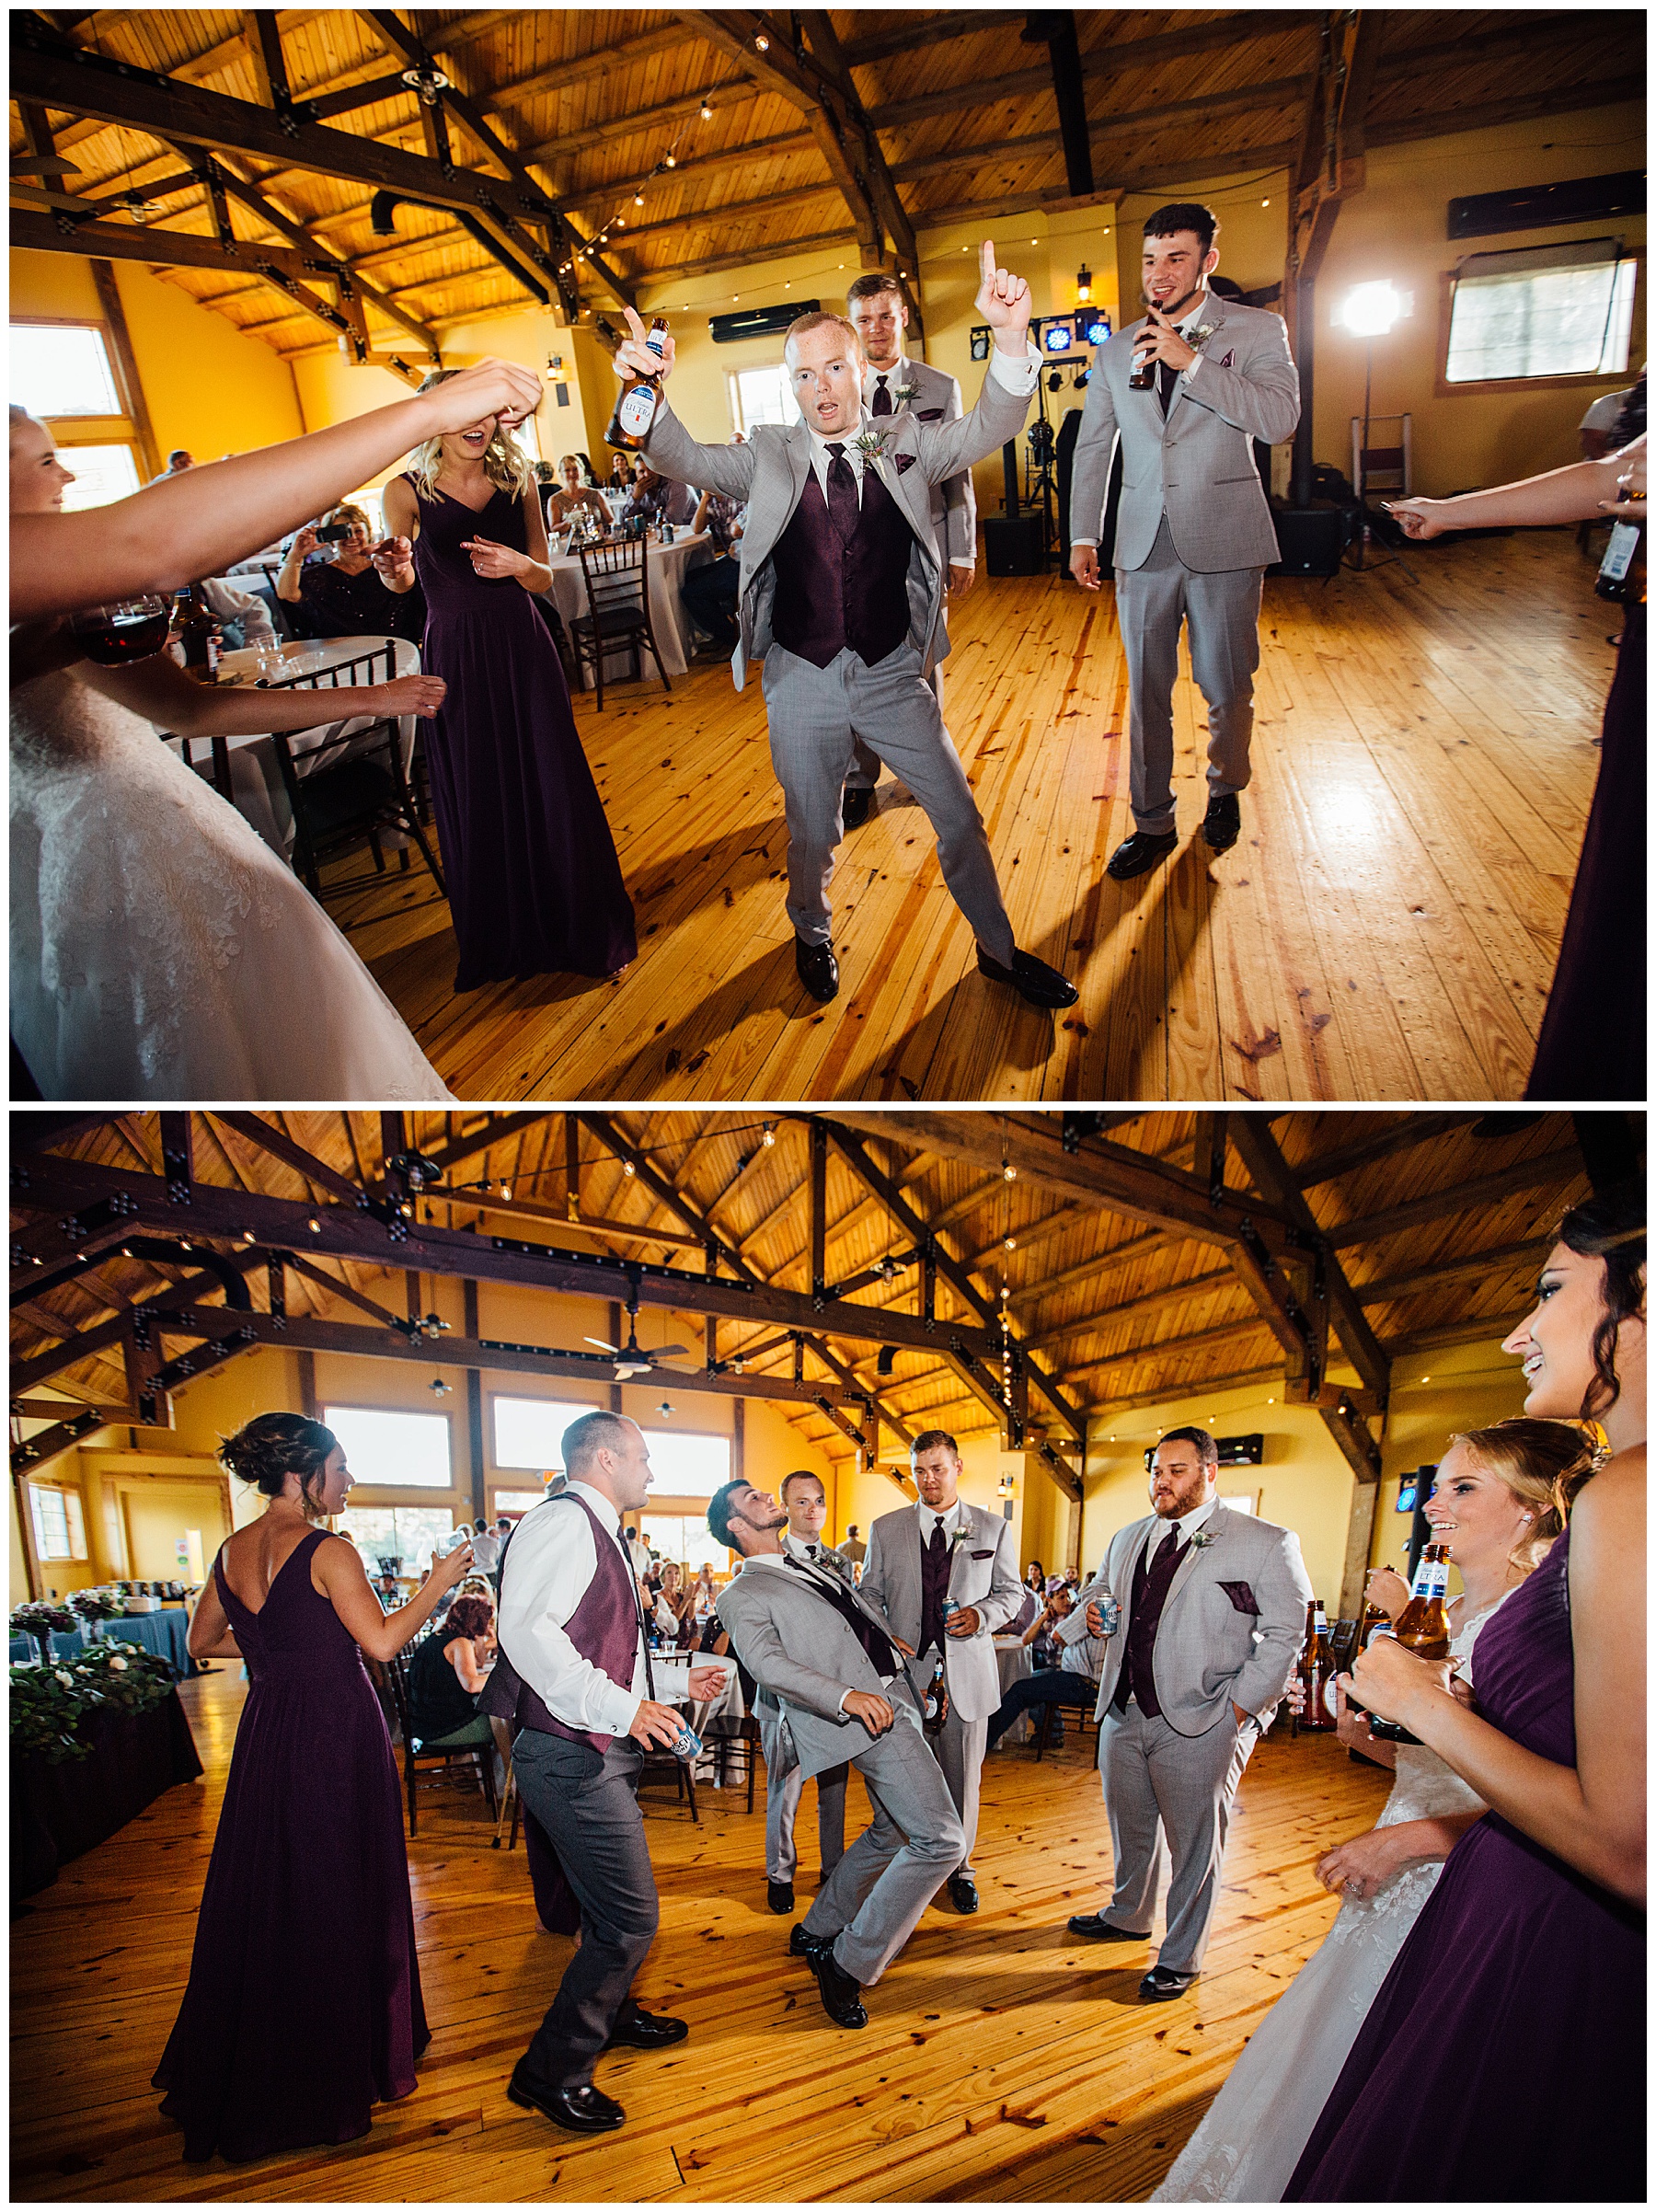 Wedding party dancing